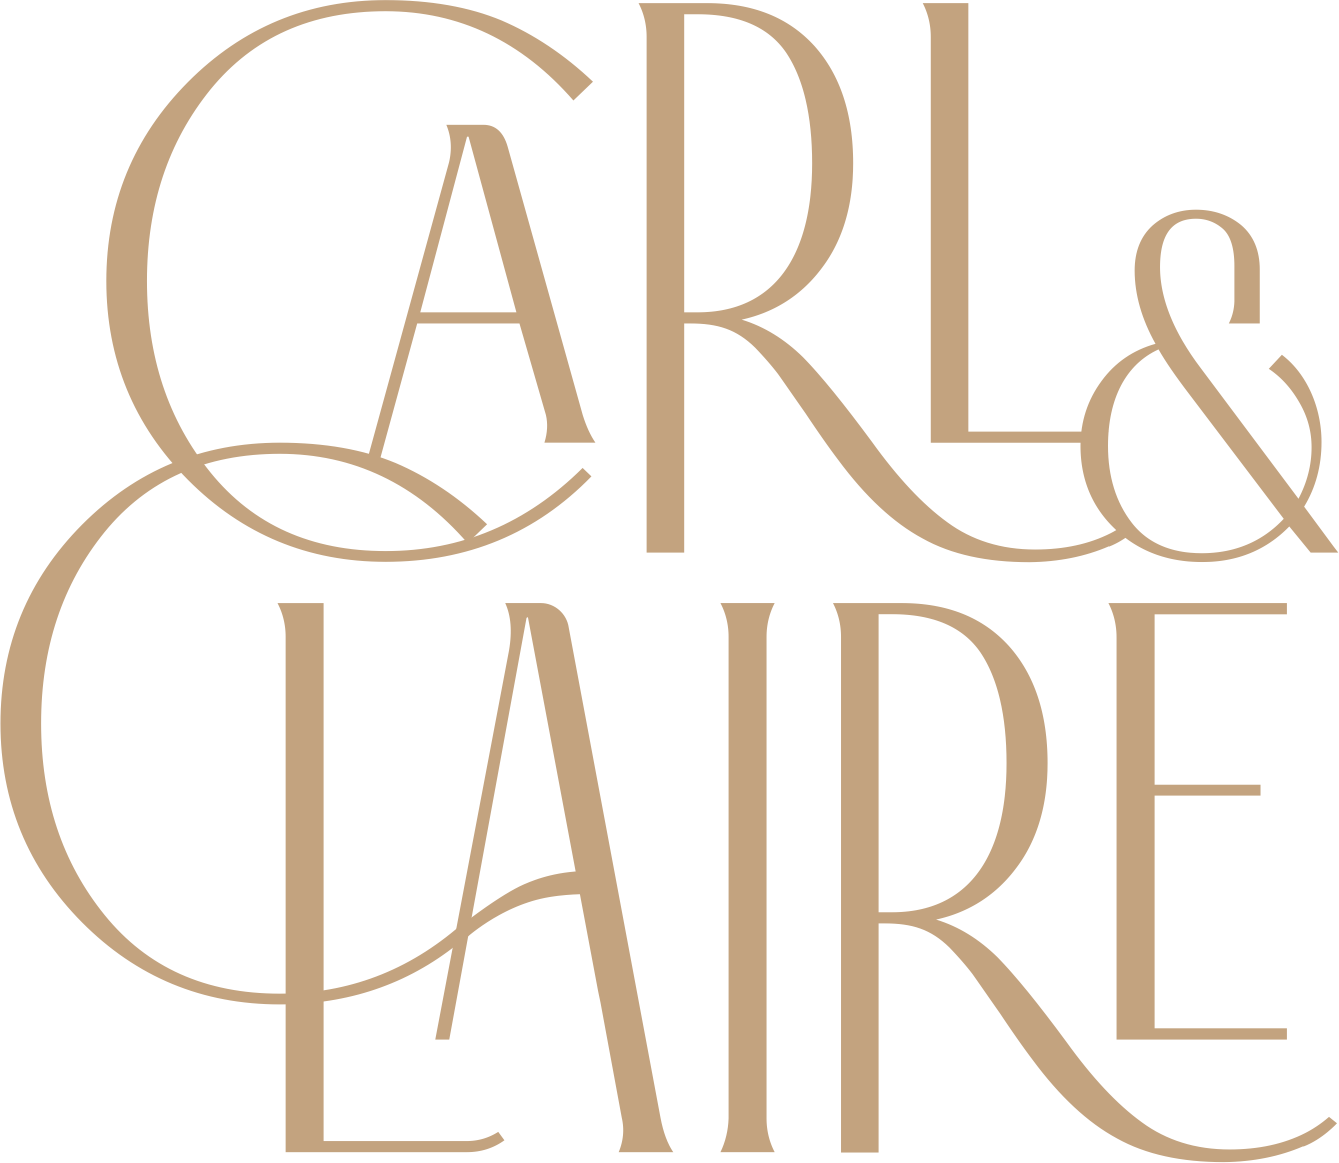 Carl & Claire Perfumery